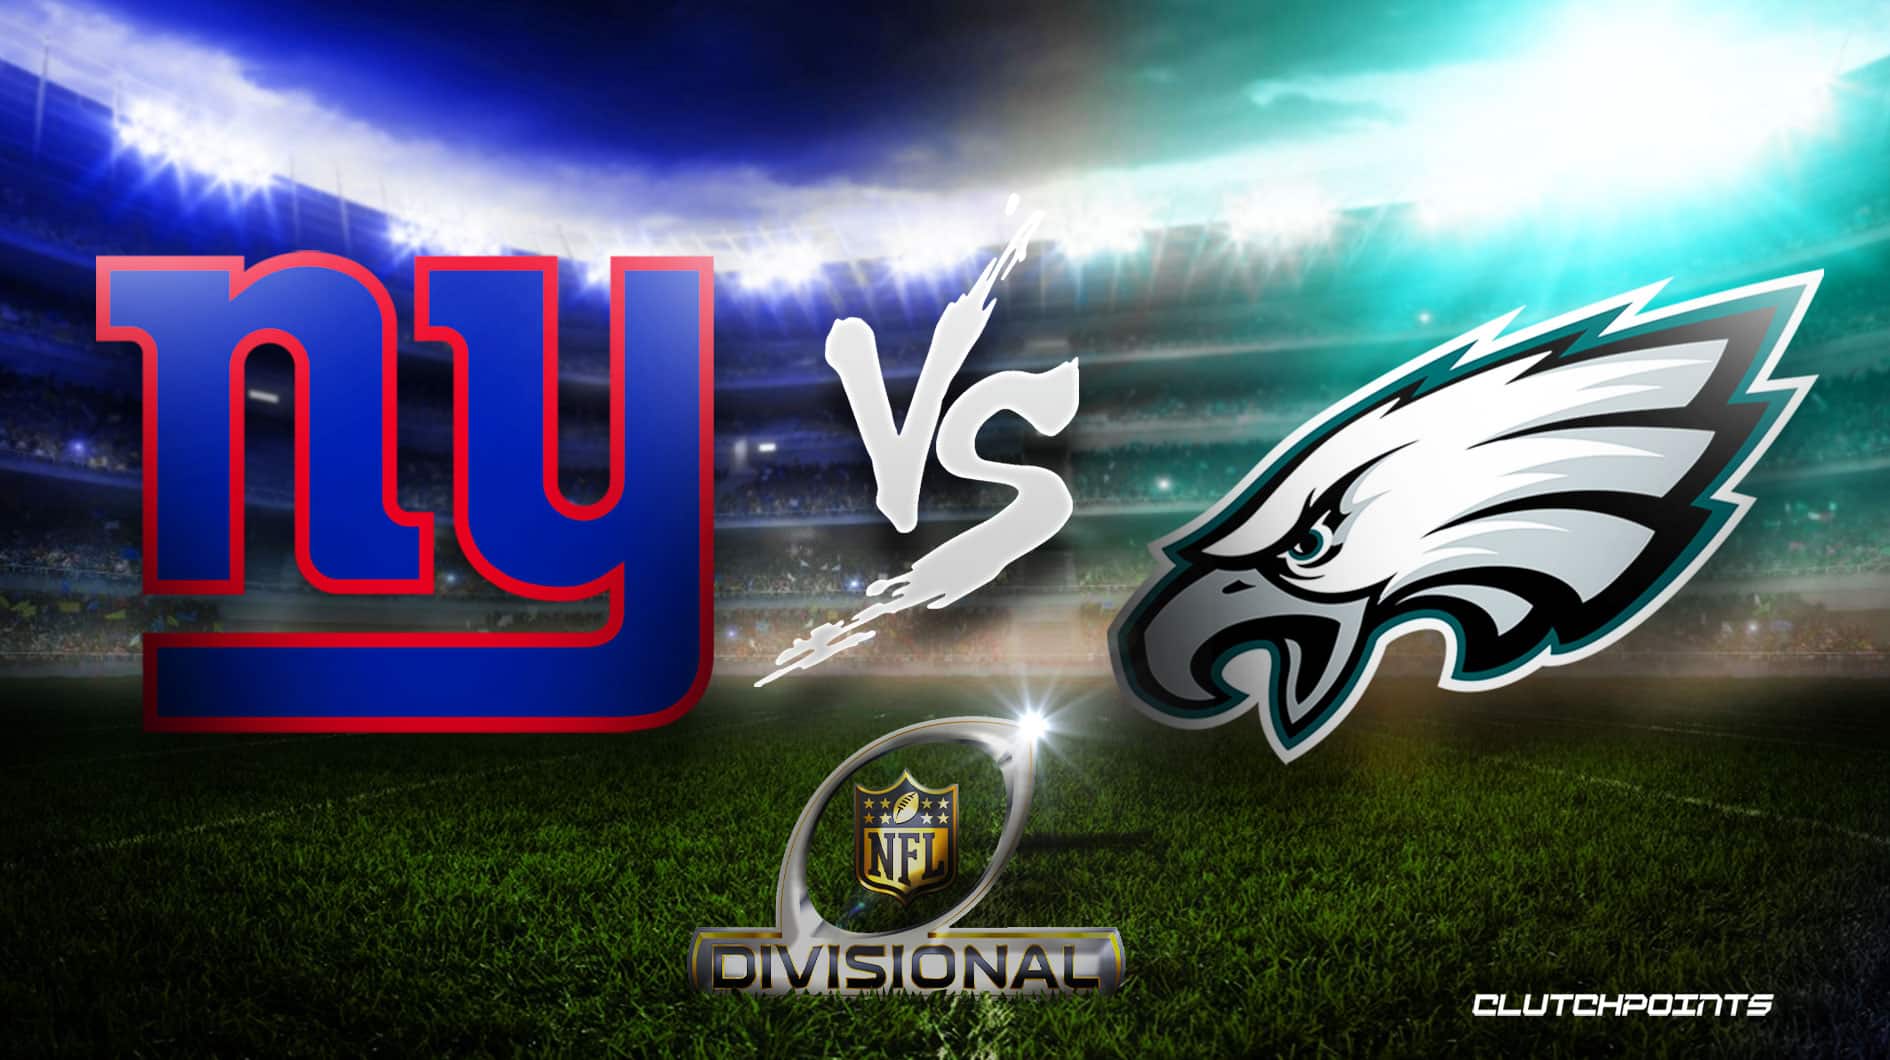 Giants vs. Eagles prediction, betting odds for NFL Week 18 